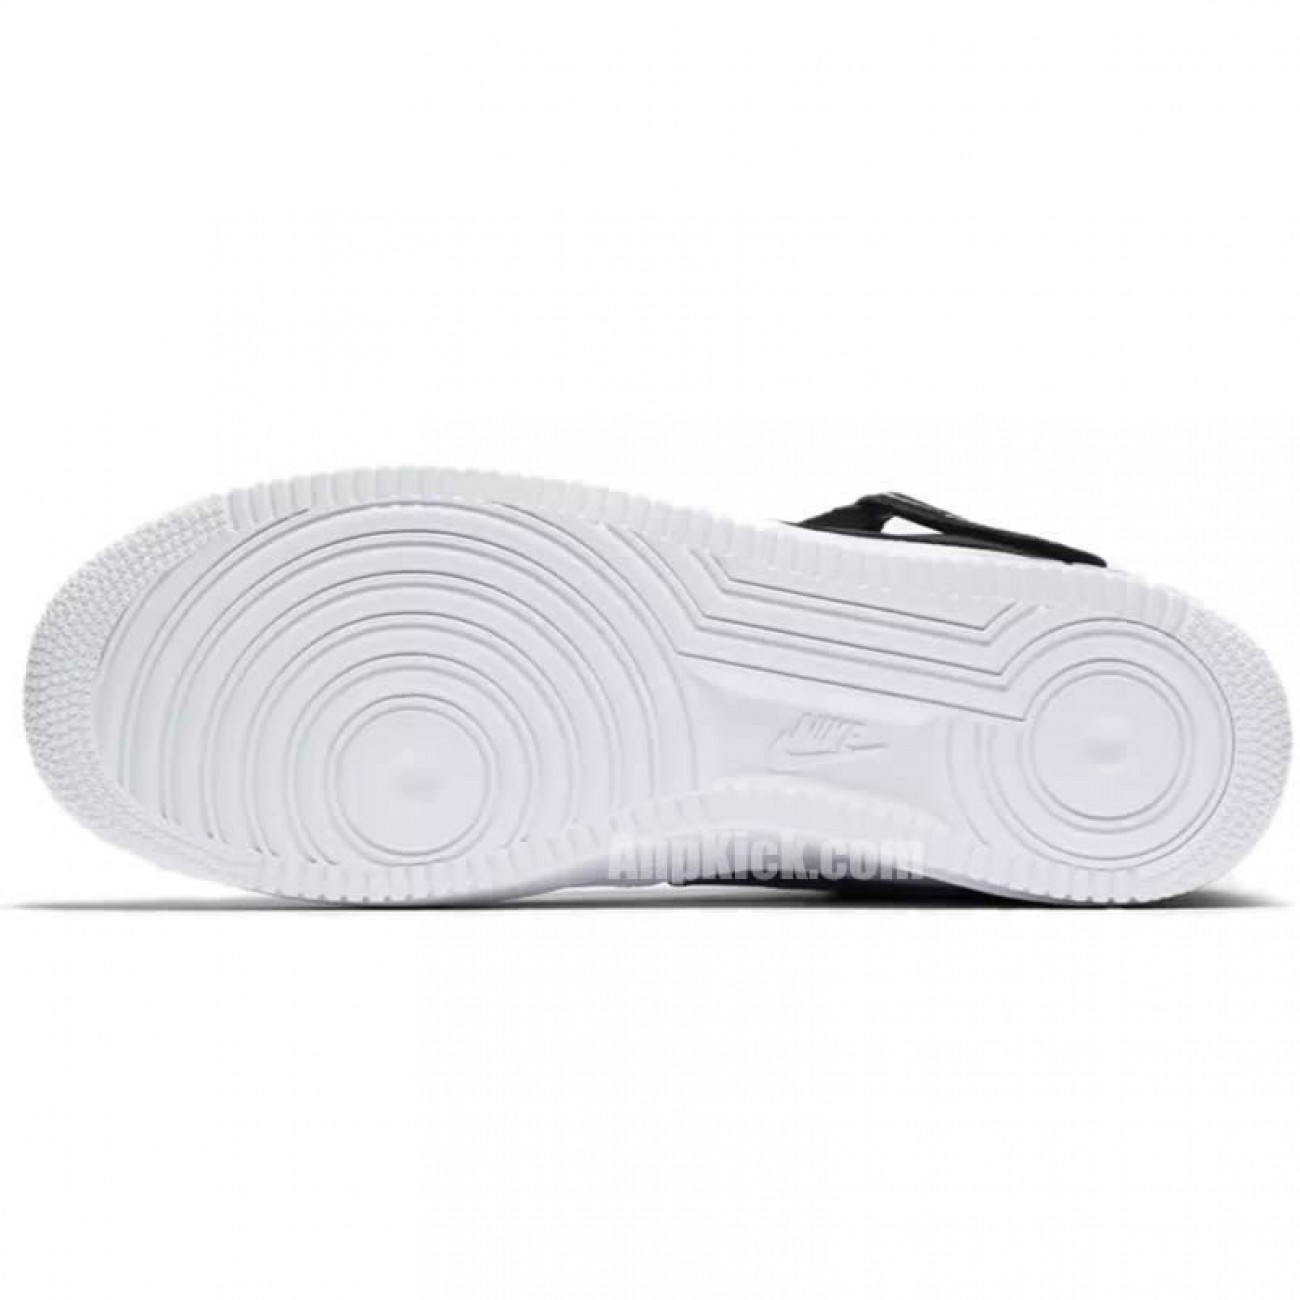 Nike Air Force 1 Mid 07 LV8 Utility White Black Shoes 804609-103